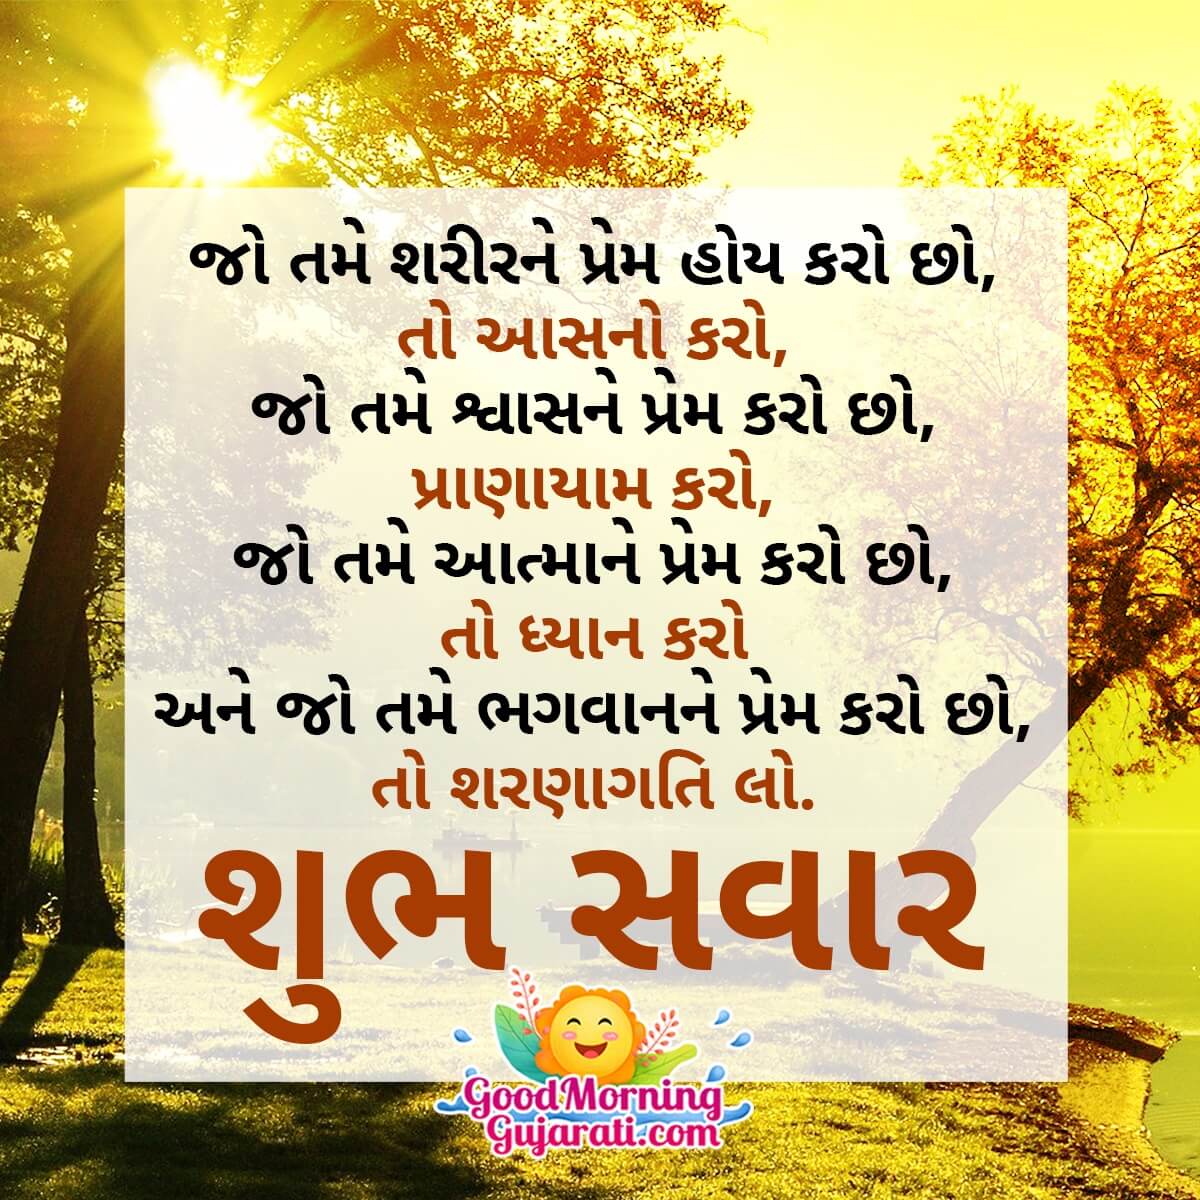 Shubh Savar Message In Gujarati